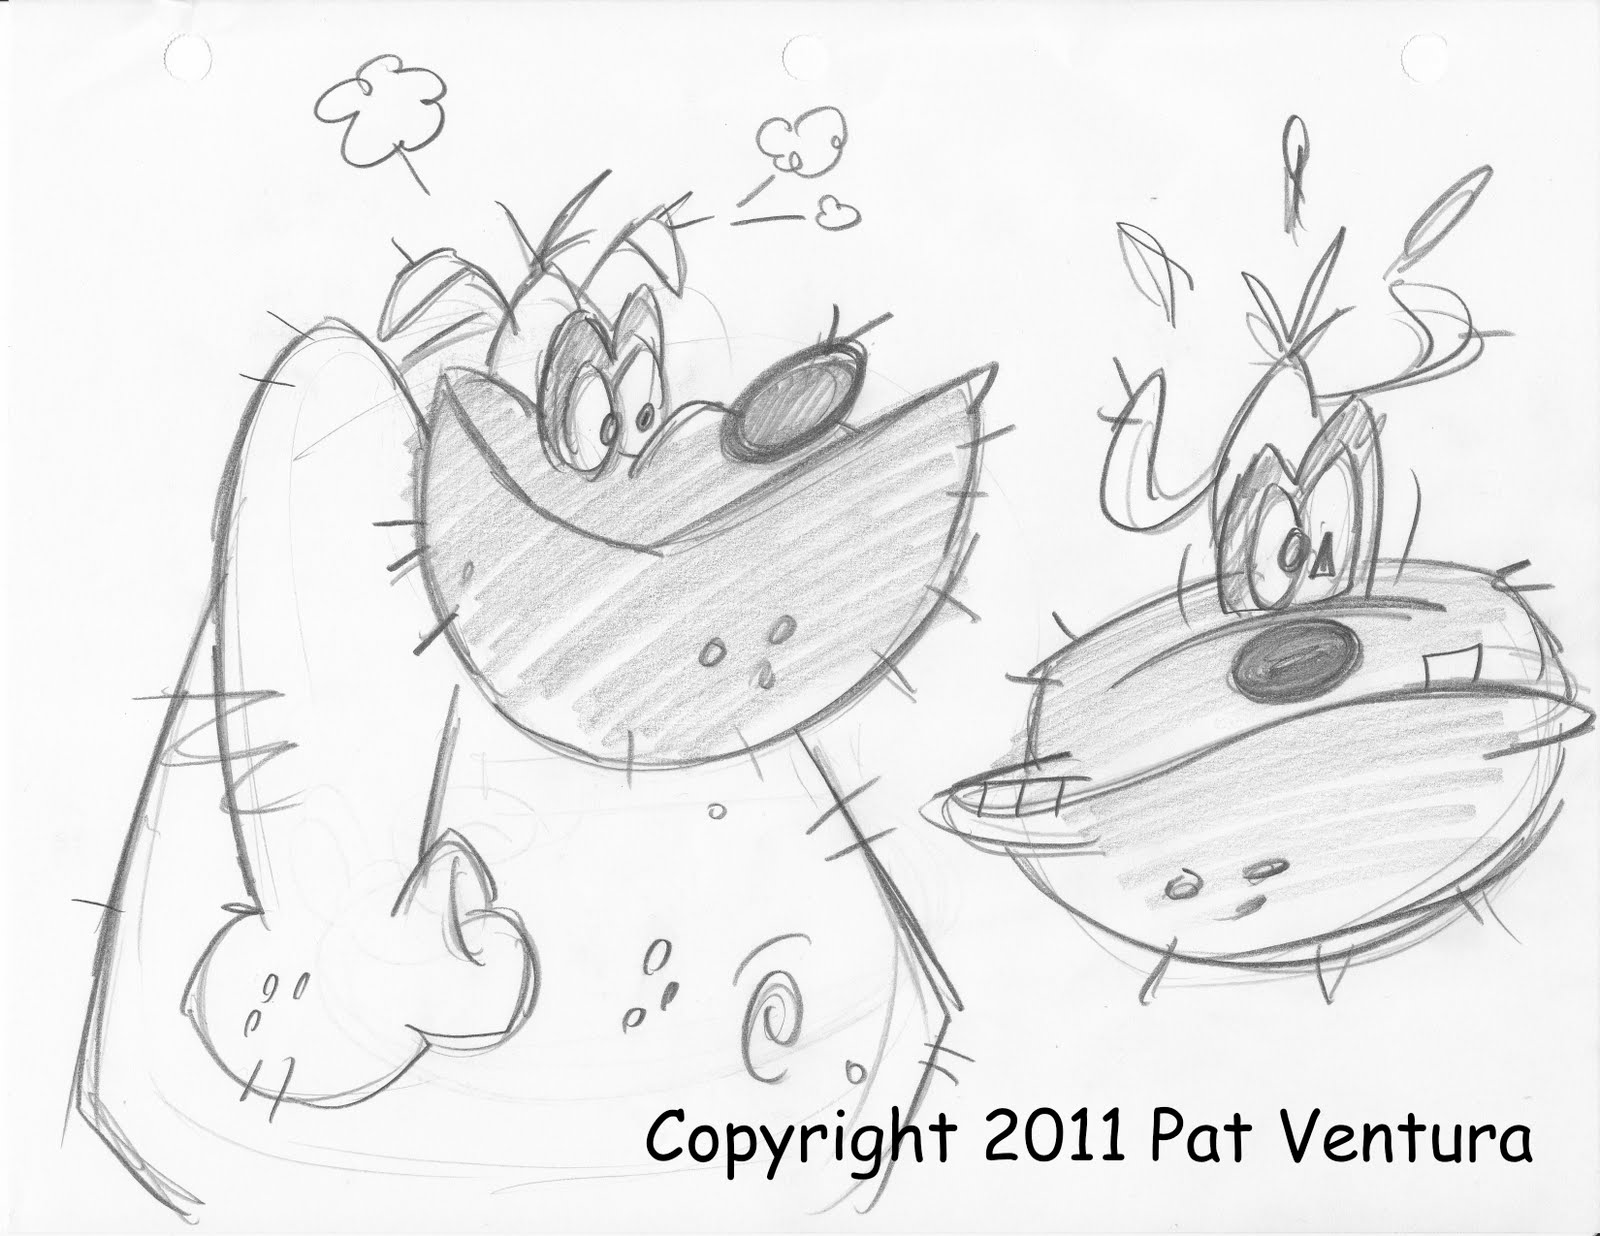 'Pat' Ventura's VenturaToons: Funny Animals